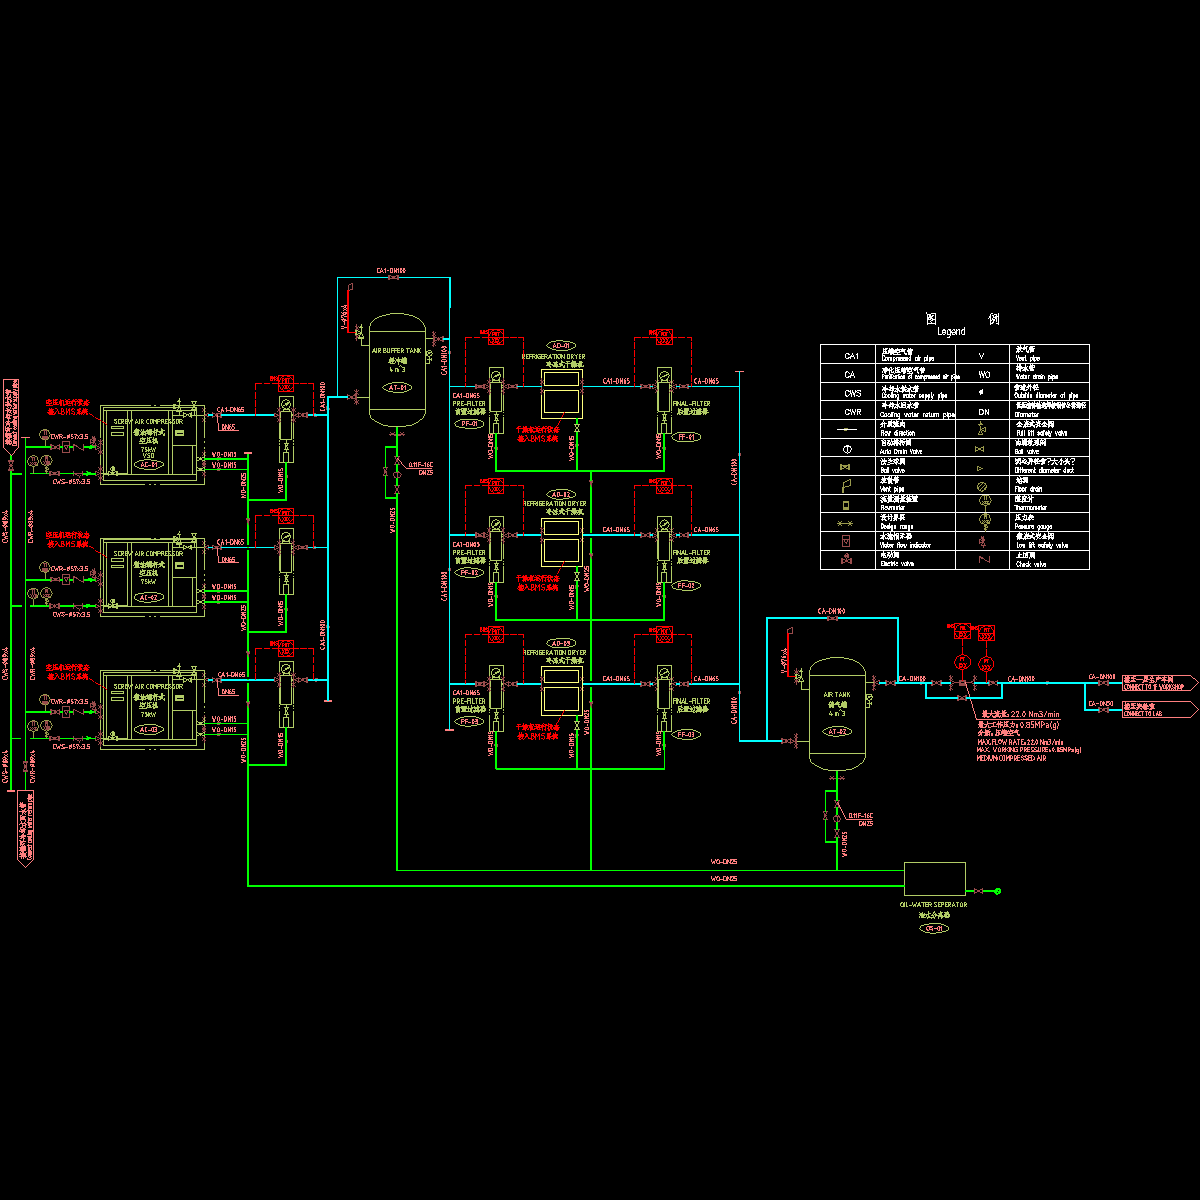 s5748sr-01-101 compressed air system flow diagram.dwg